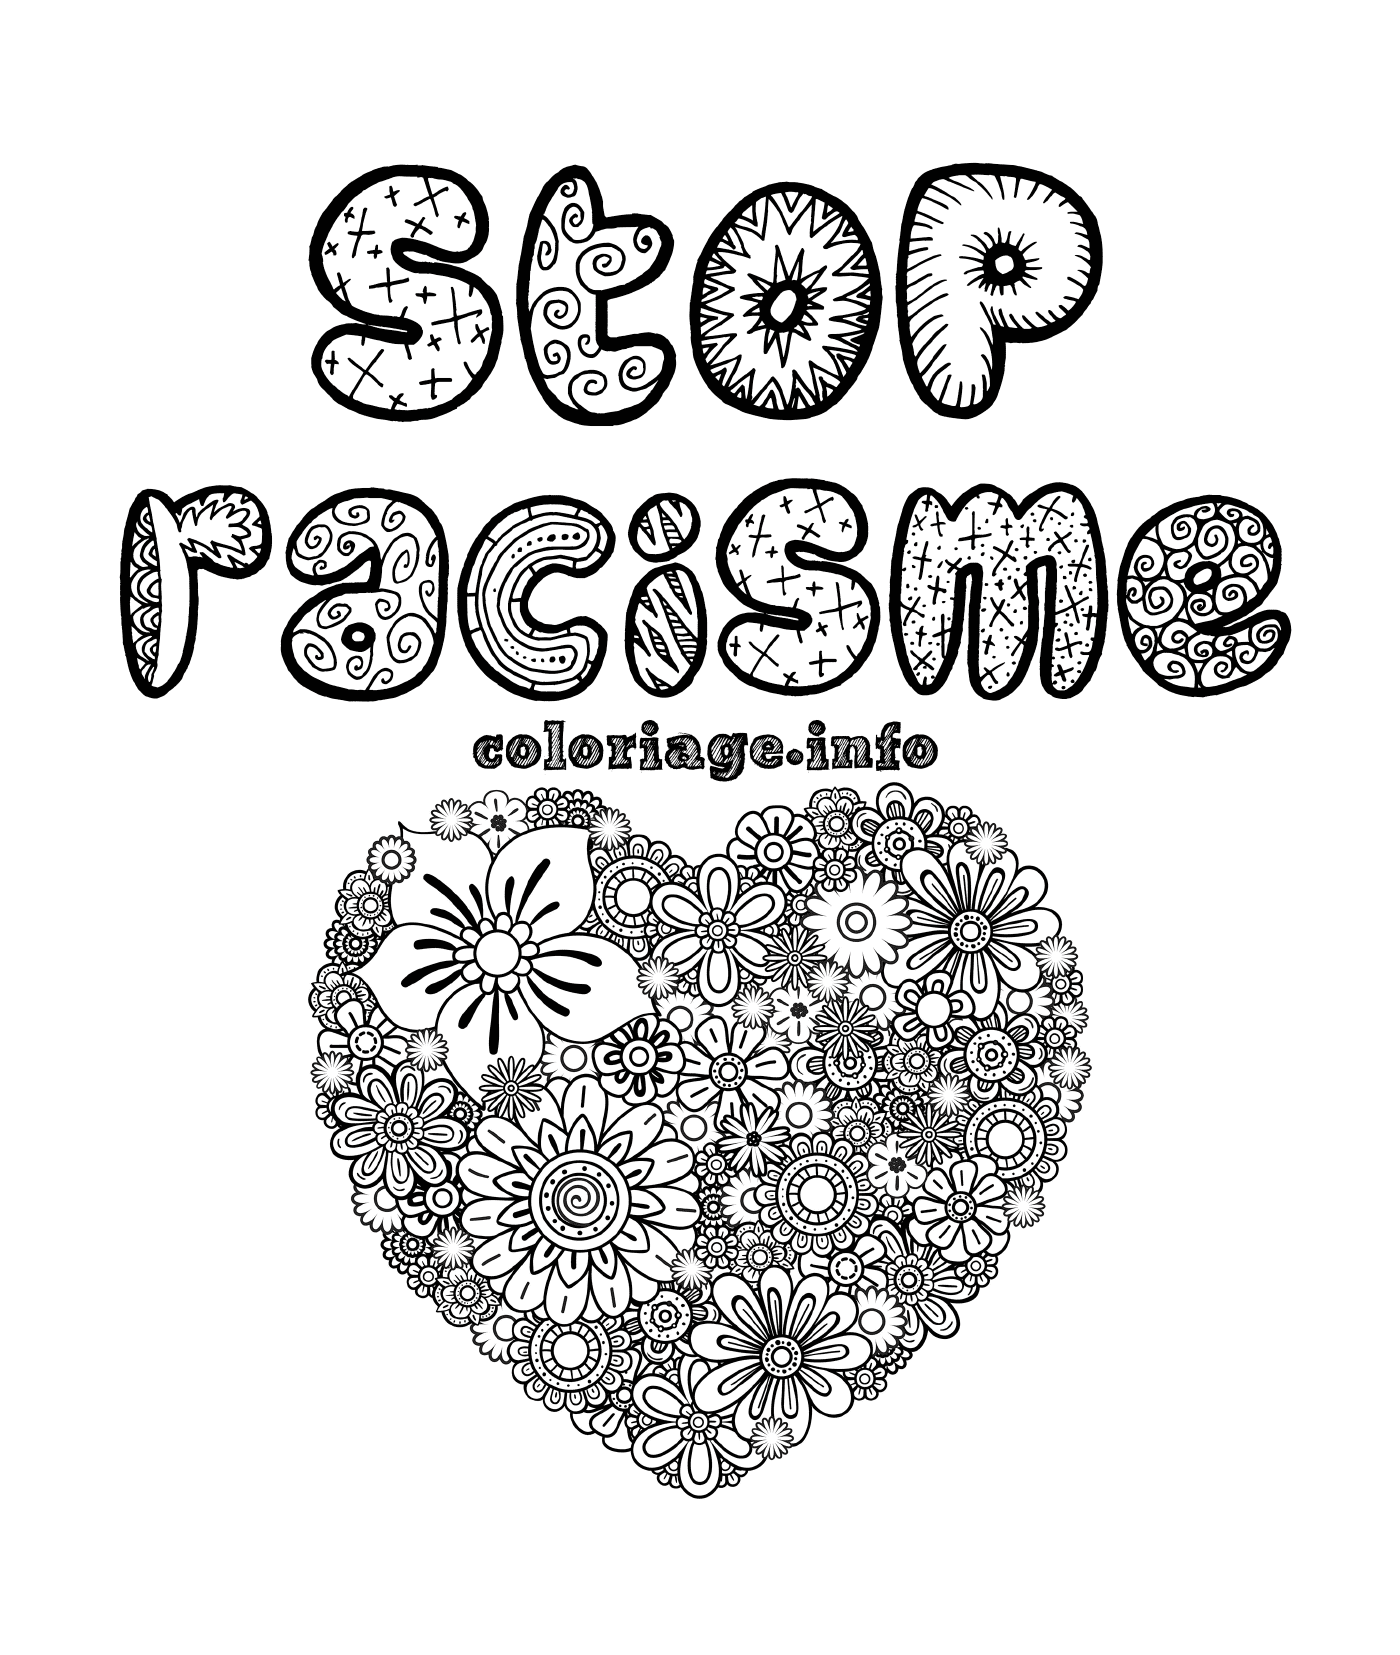  Stop racism, mandala heart 